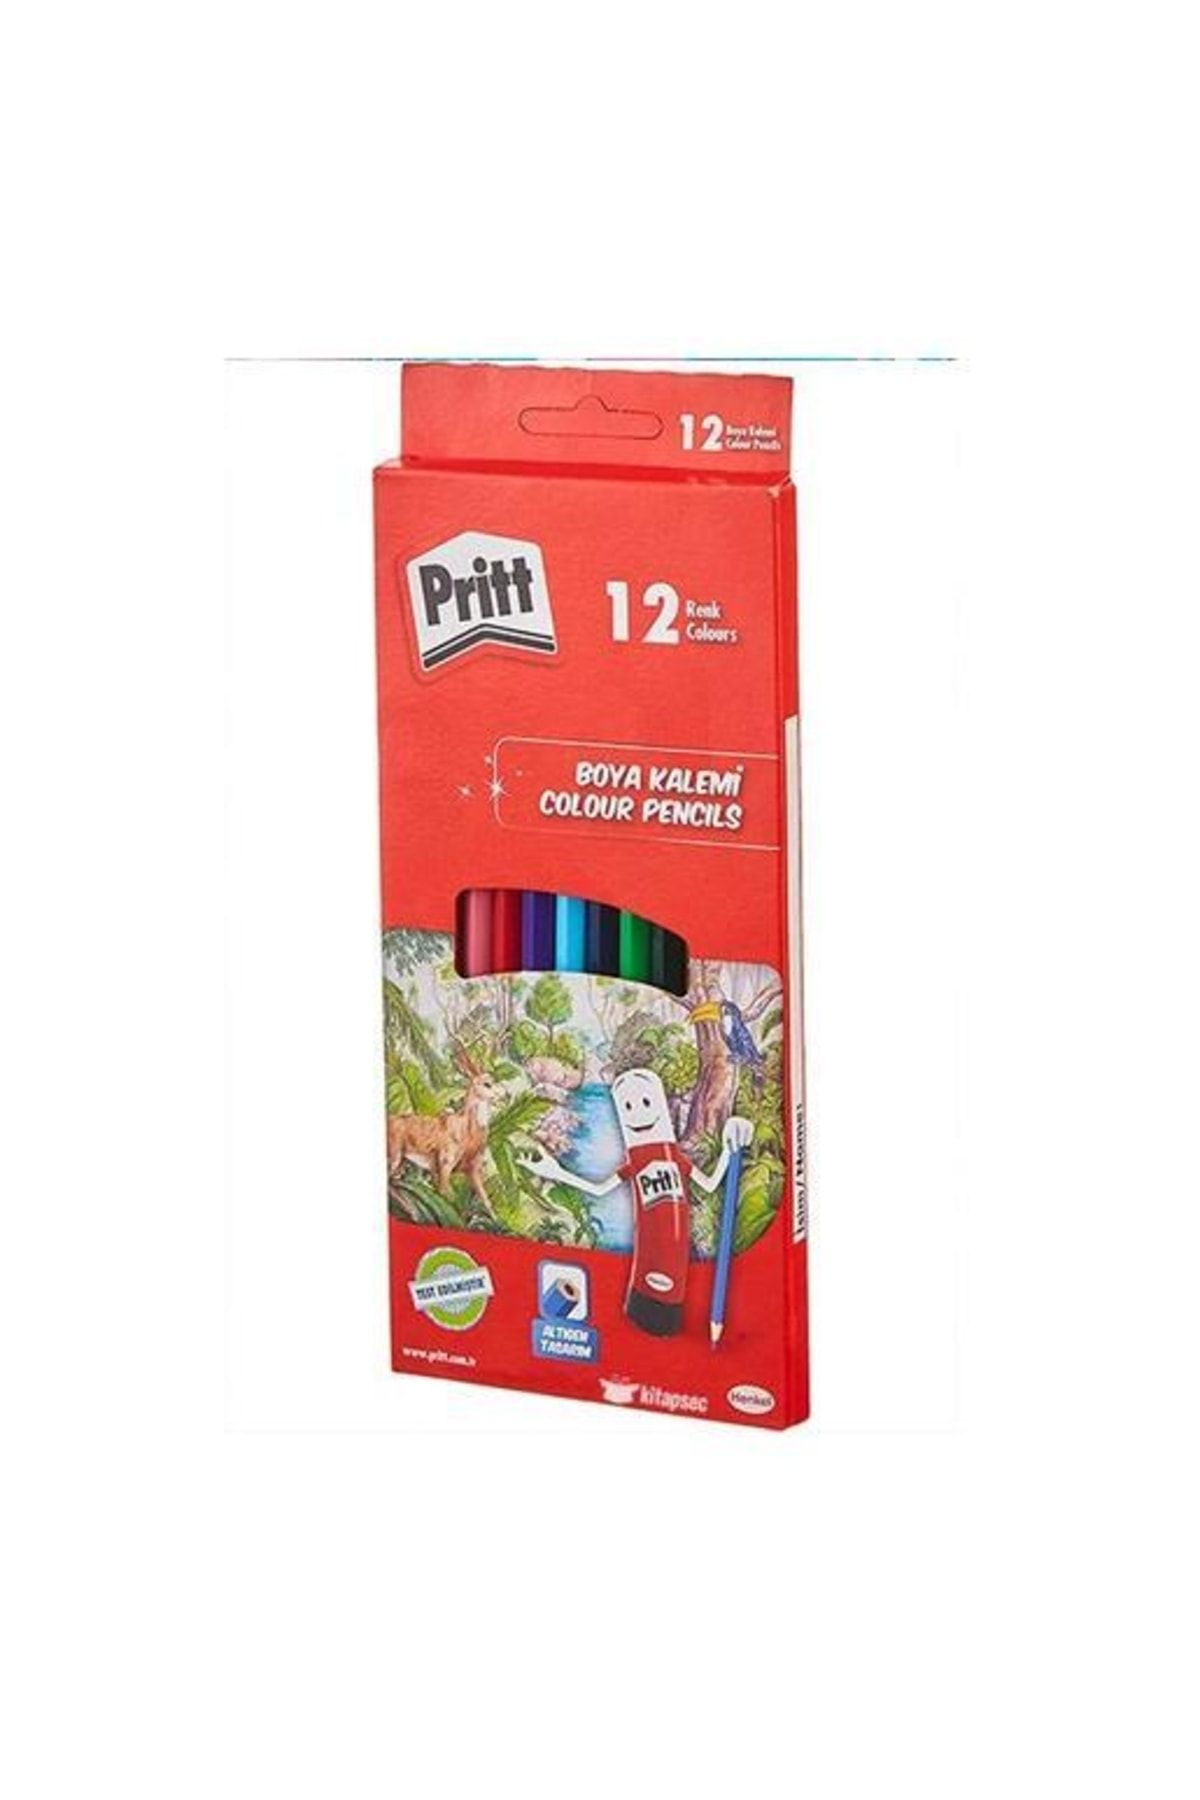 Pritt جعبه مقوایی مداد رنگی 12 رنگ 8691451003072